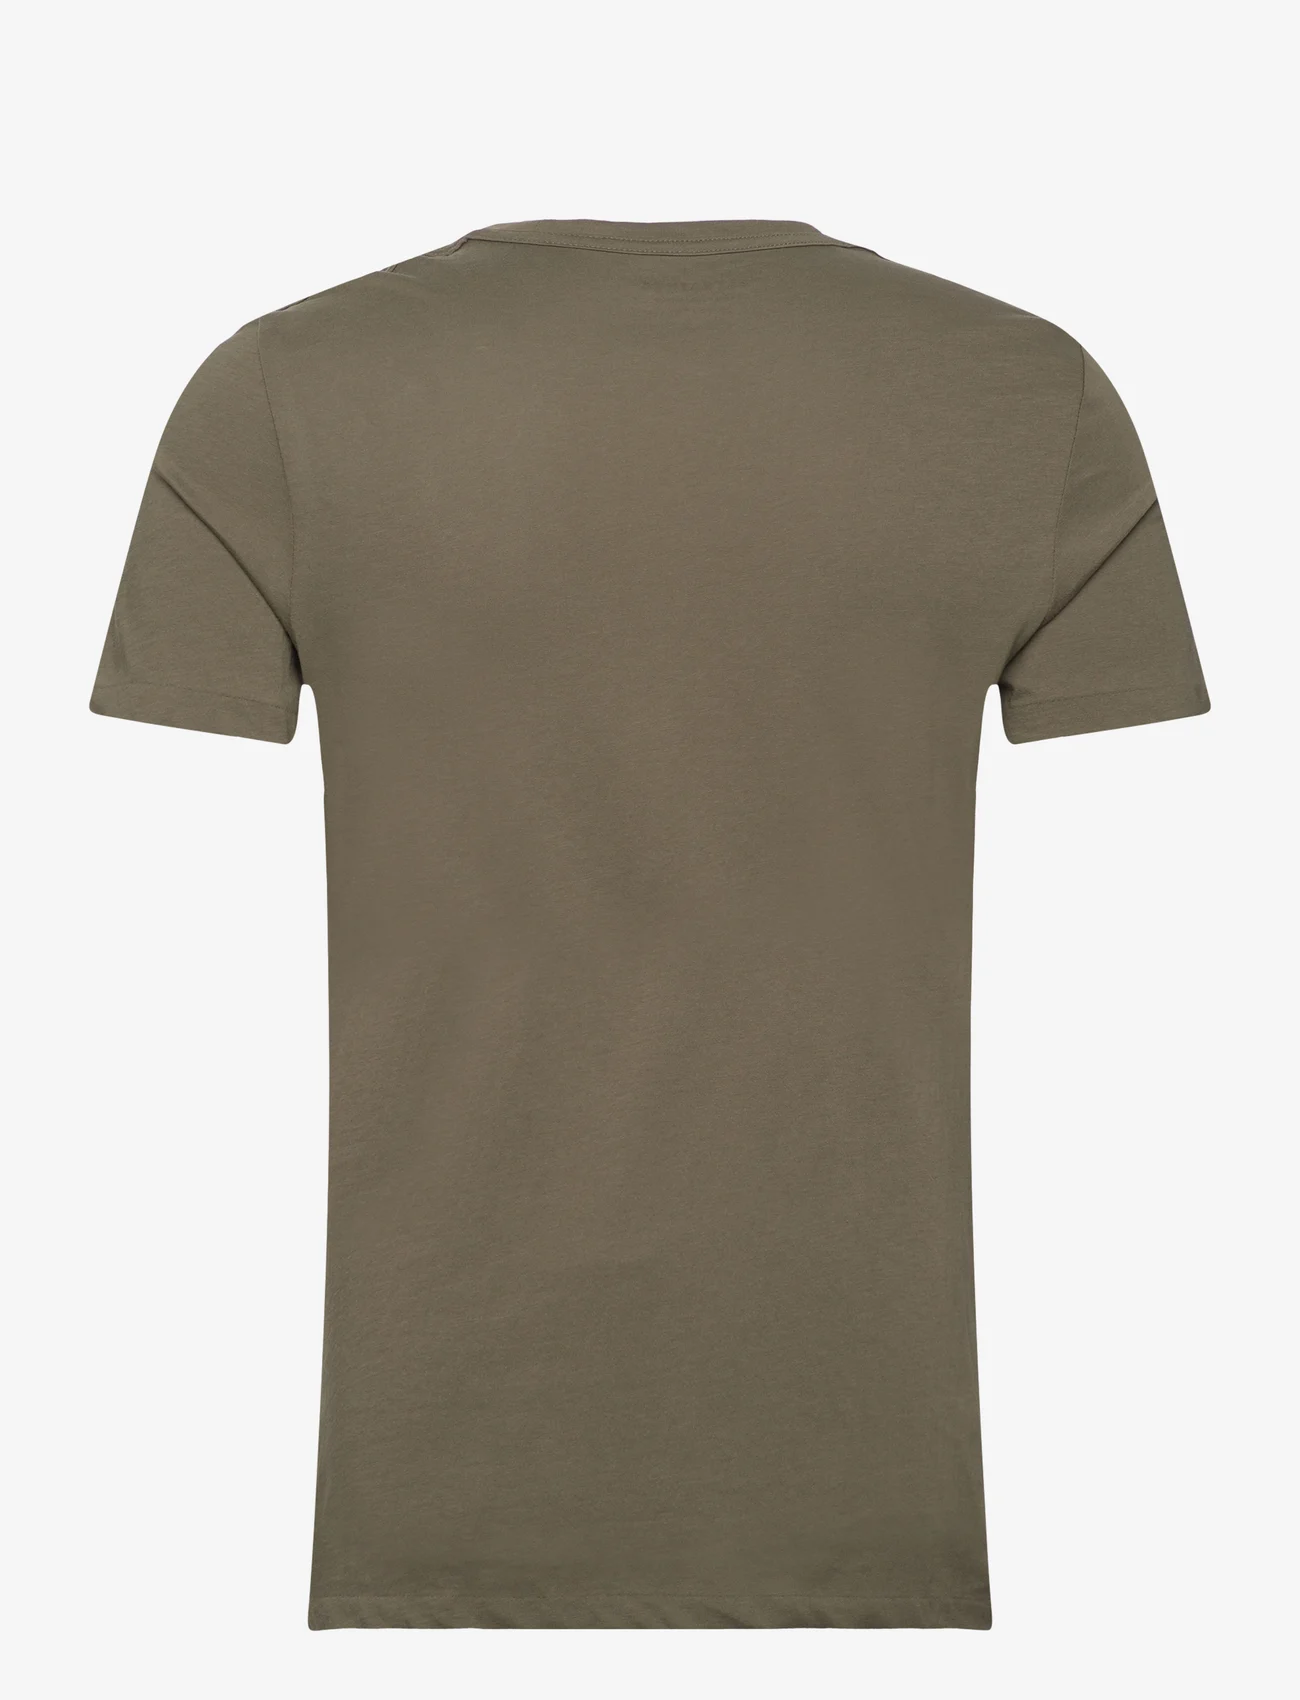 AllSaints - TONIC SS CREW - basic t-shirts - sorghum green - 1